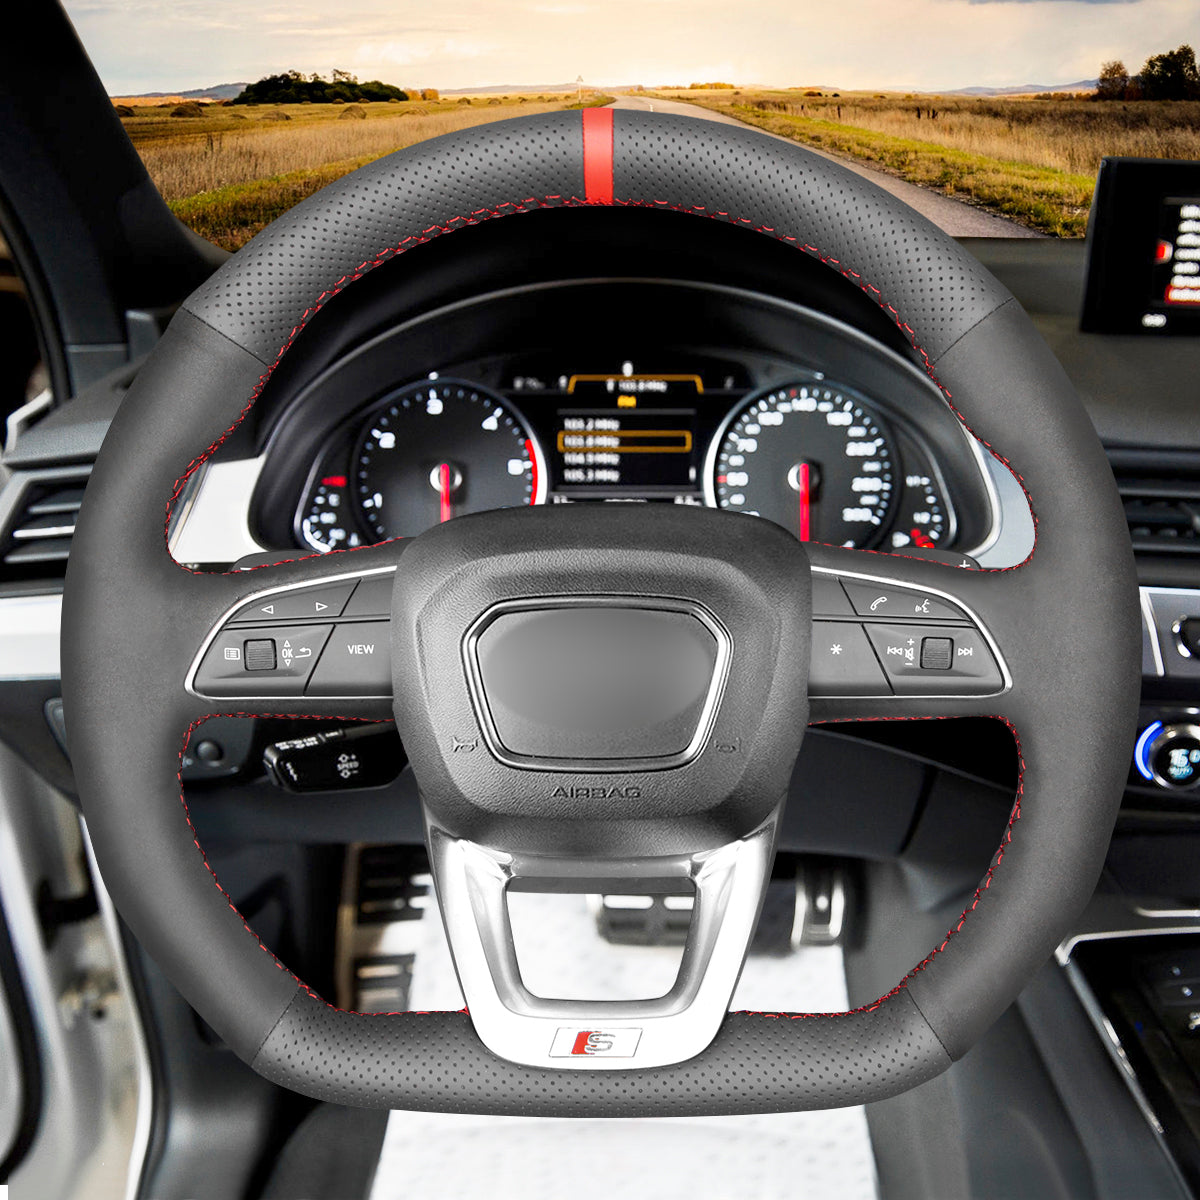 MEWANT Hand Stitch Black Leather Car Steering Wheel Cover for Audi Q3 2018-2019 Q5 SQ5 2017-2019 Q7 SQ7 2015-2019 Q8 SQ8 2018-2019